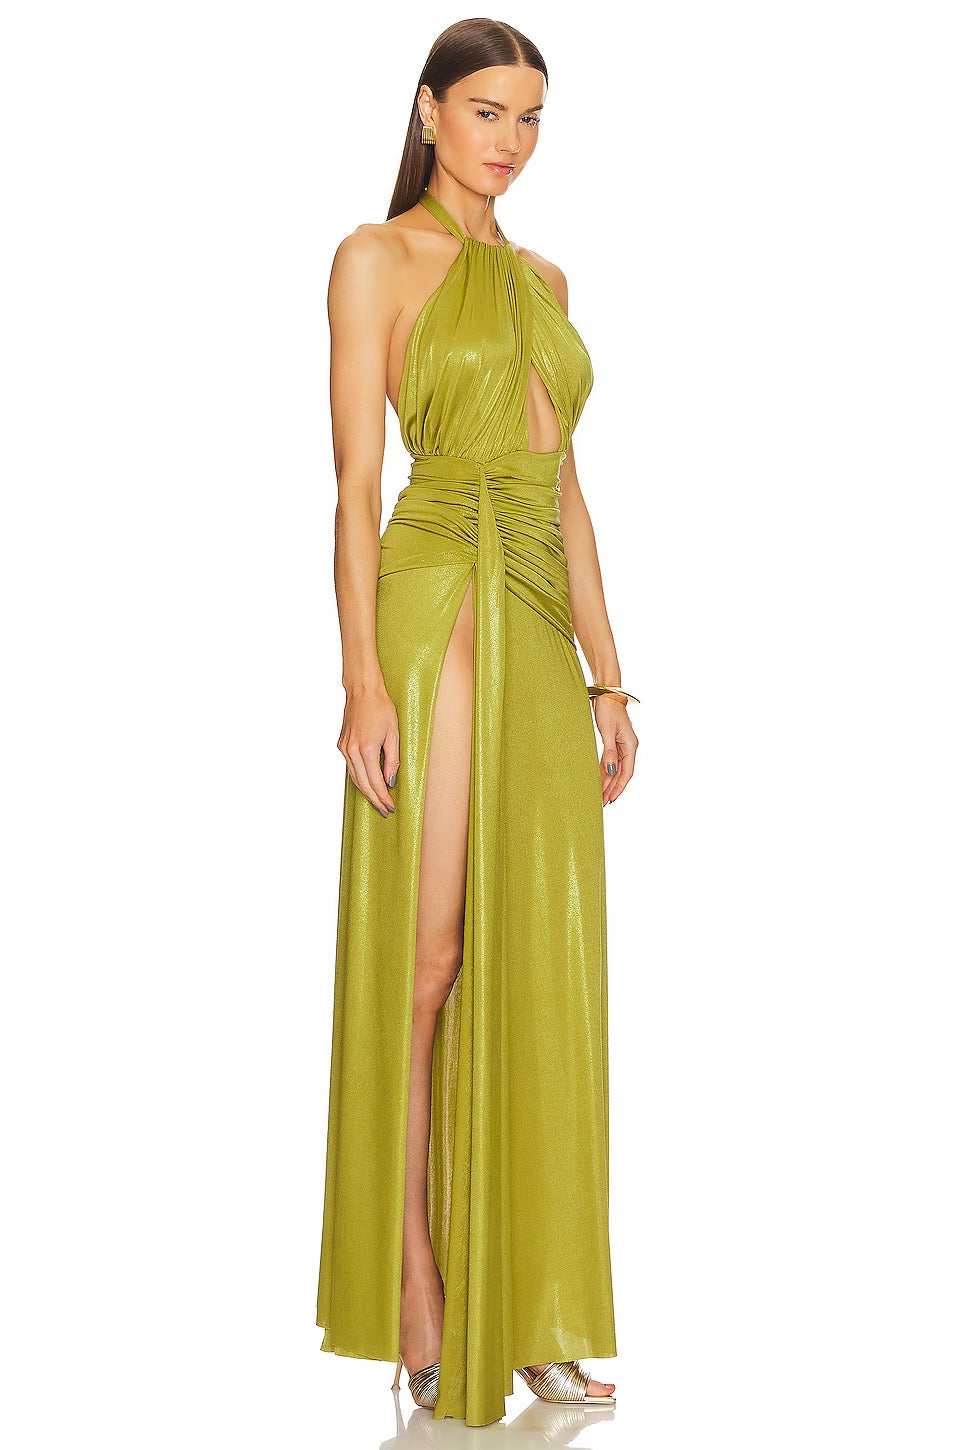 PatBo Metallic Jersey Maxi Dress - Premium Long dress from Marina St Barth - Just $795! Shop now at Marina St Barth